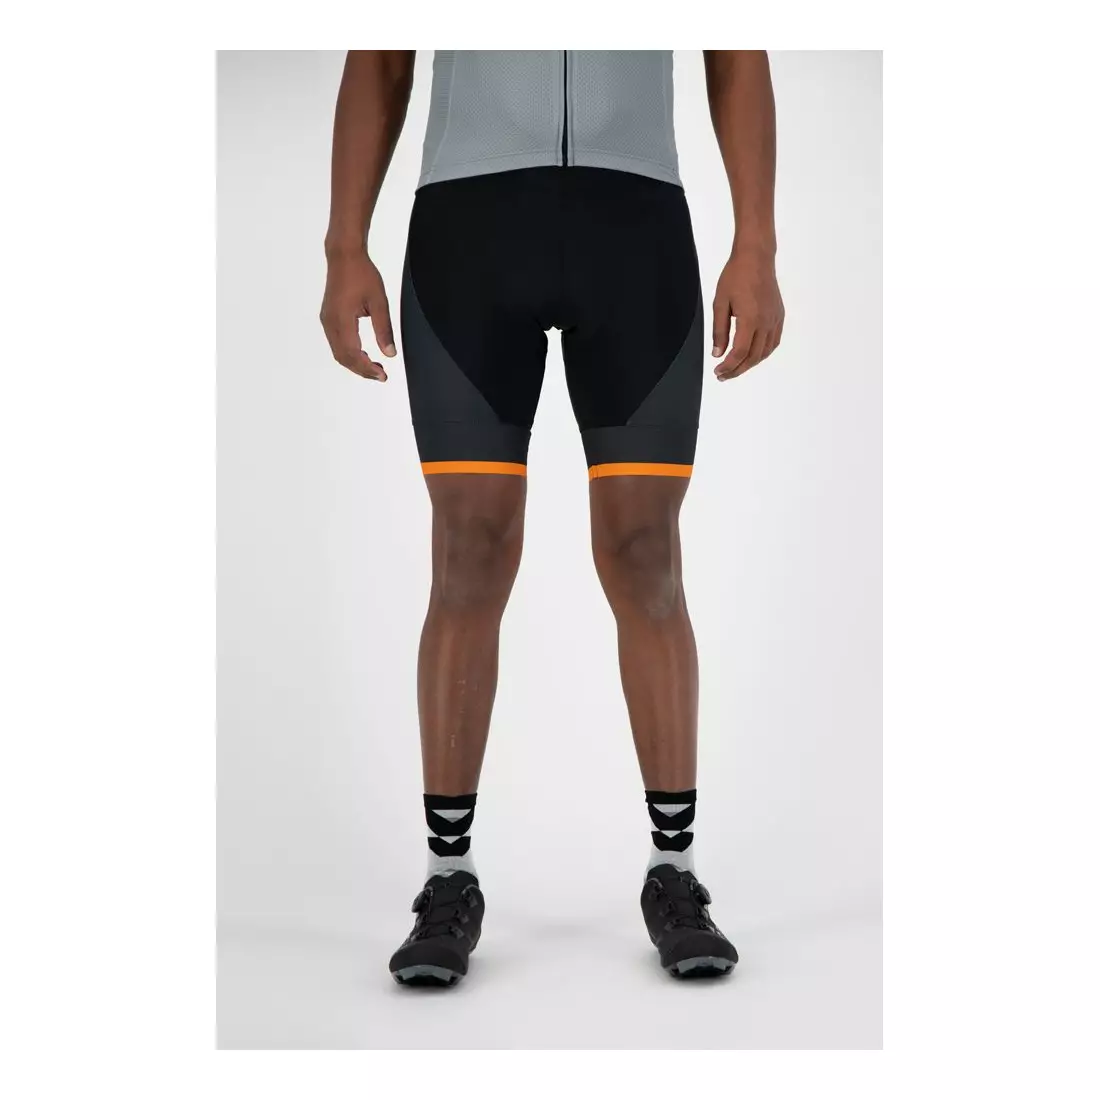 ROGELLI men's bike shorts with suspenders FUSE black/orange